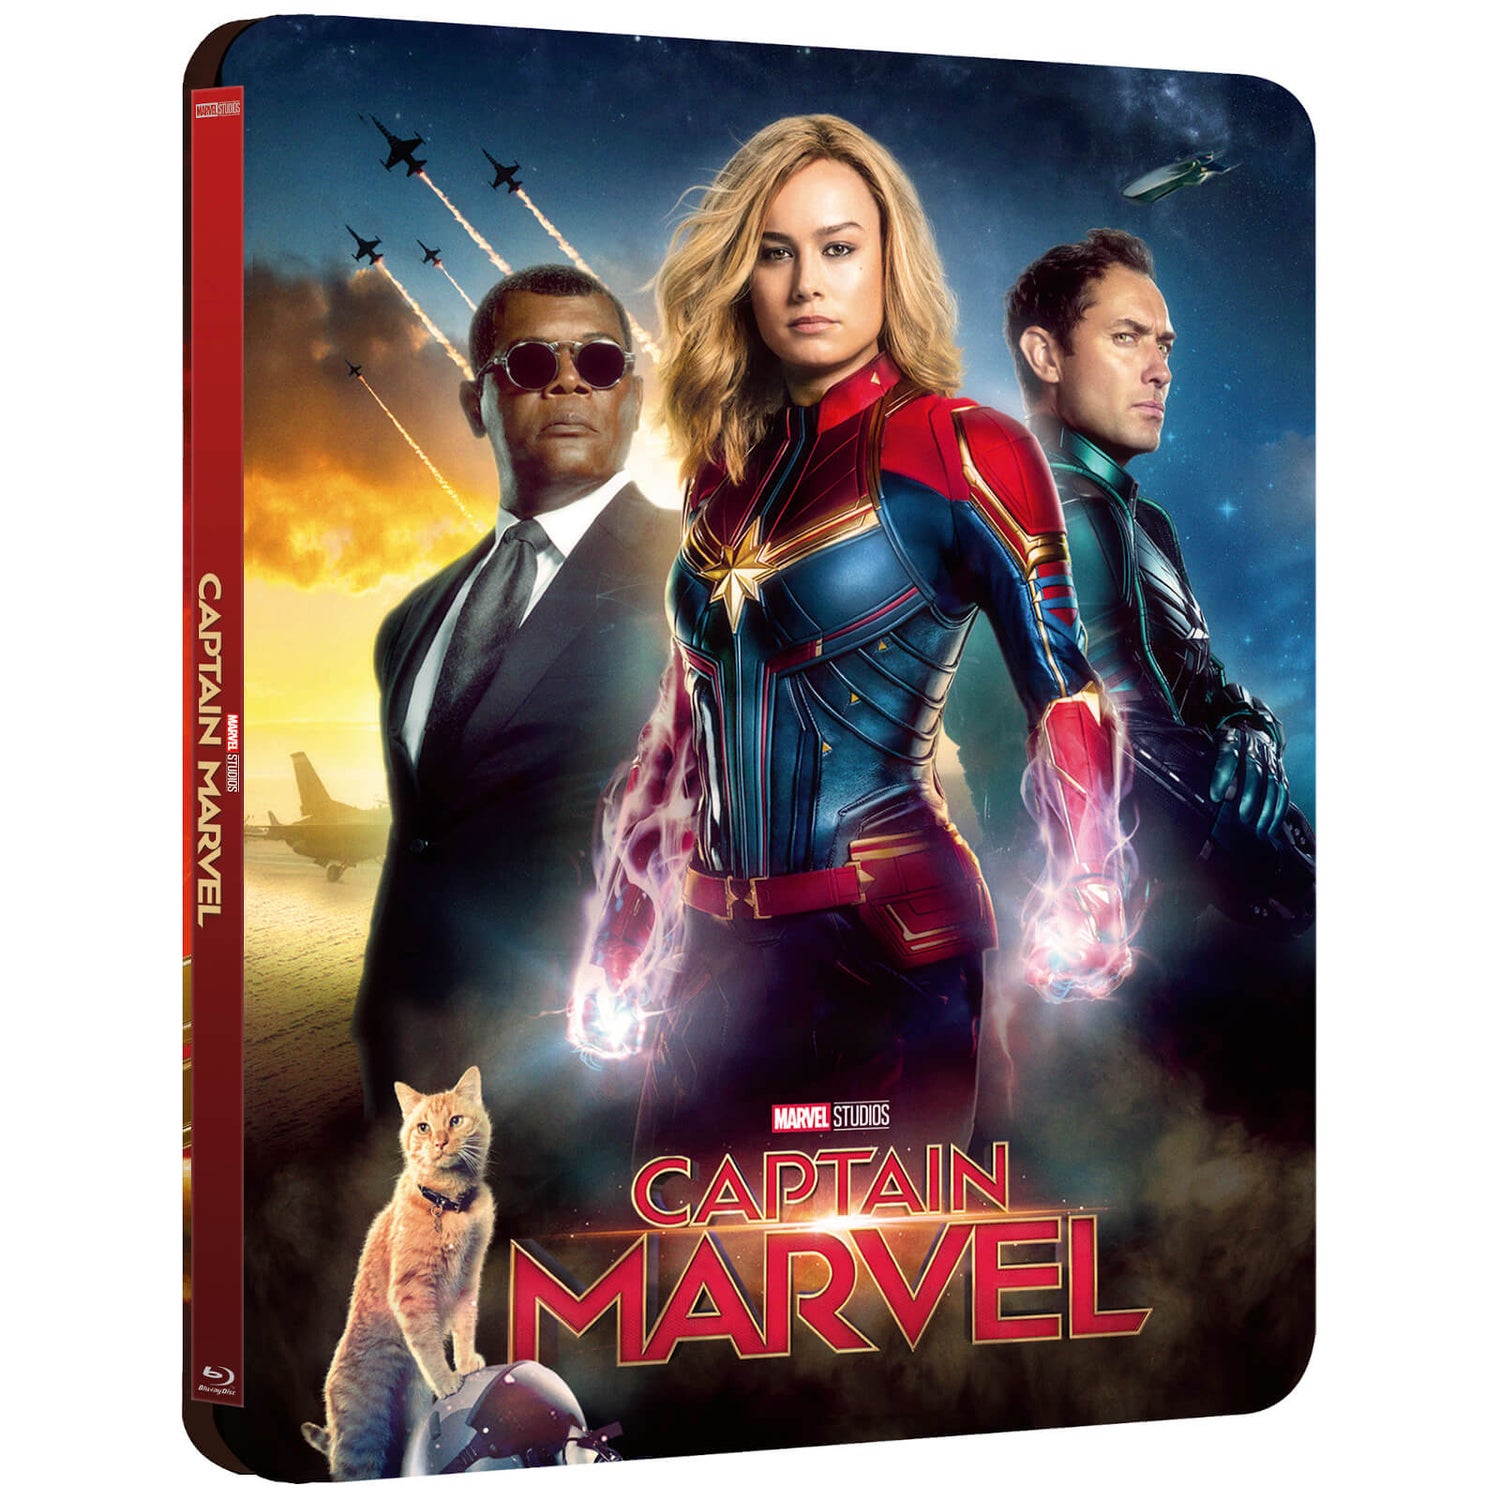 Capitana Marvel - Steelbook lenticular 3D exclusivo de Zavvi (Incluye Blu-ray 2D)